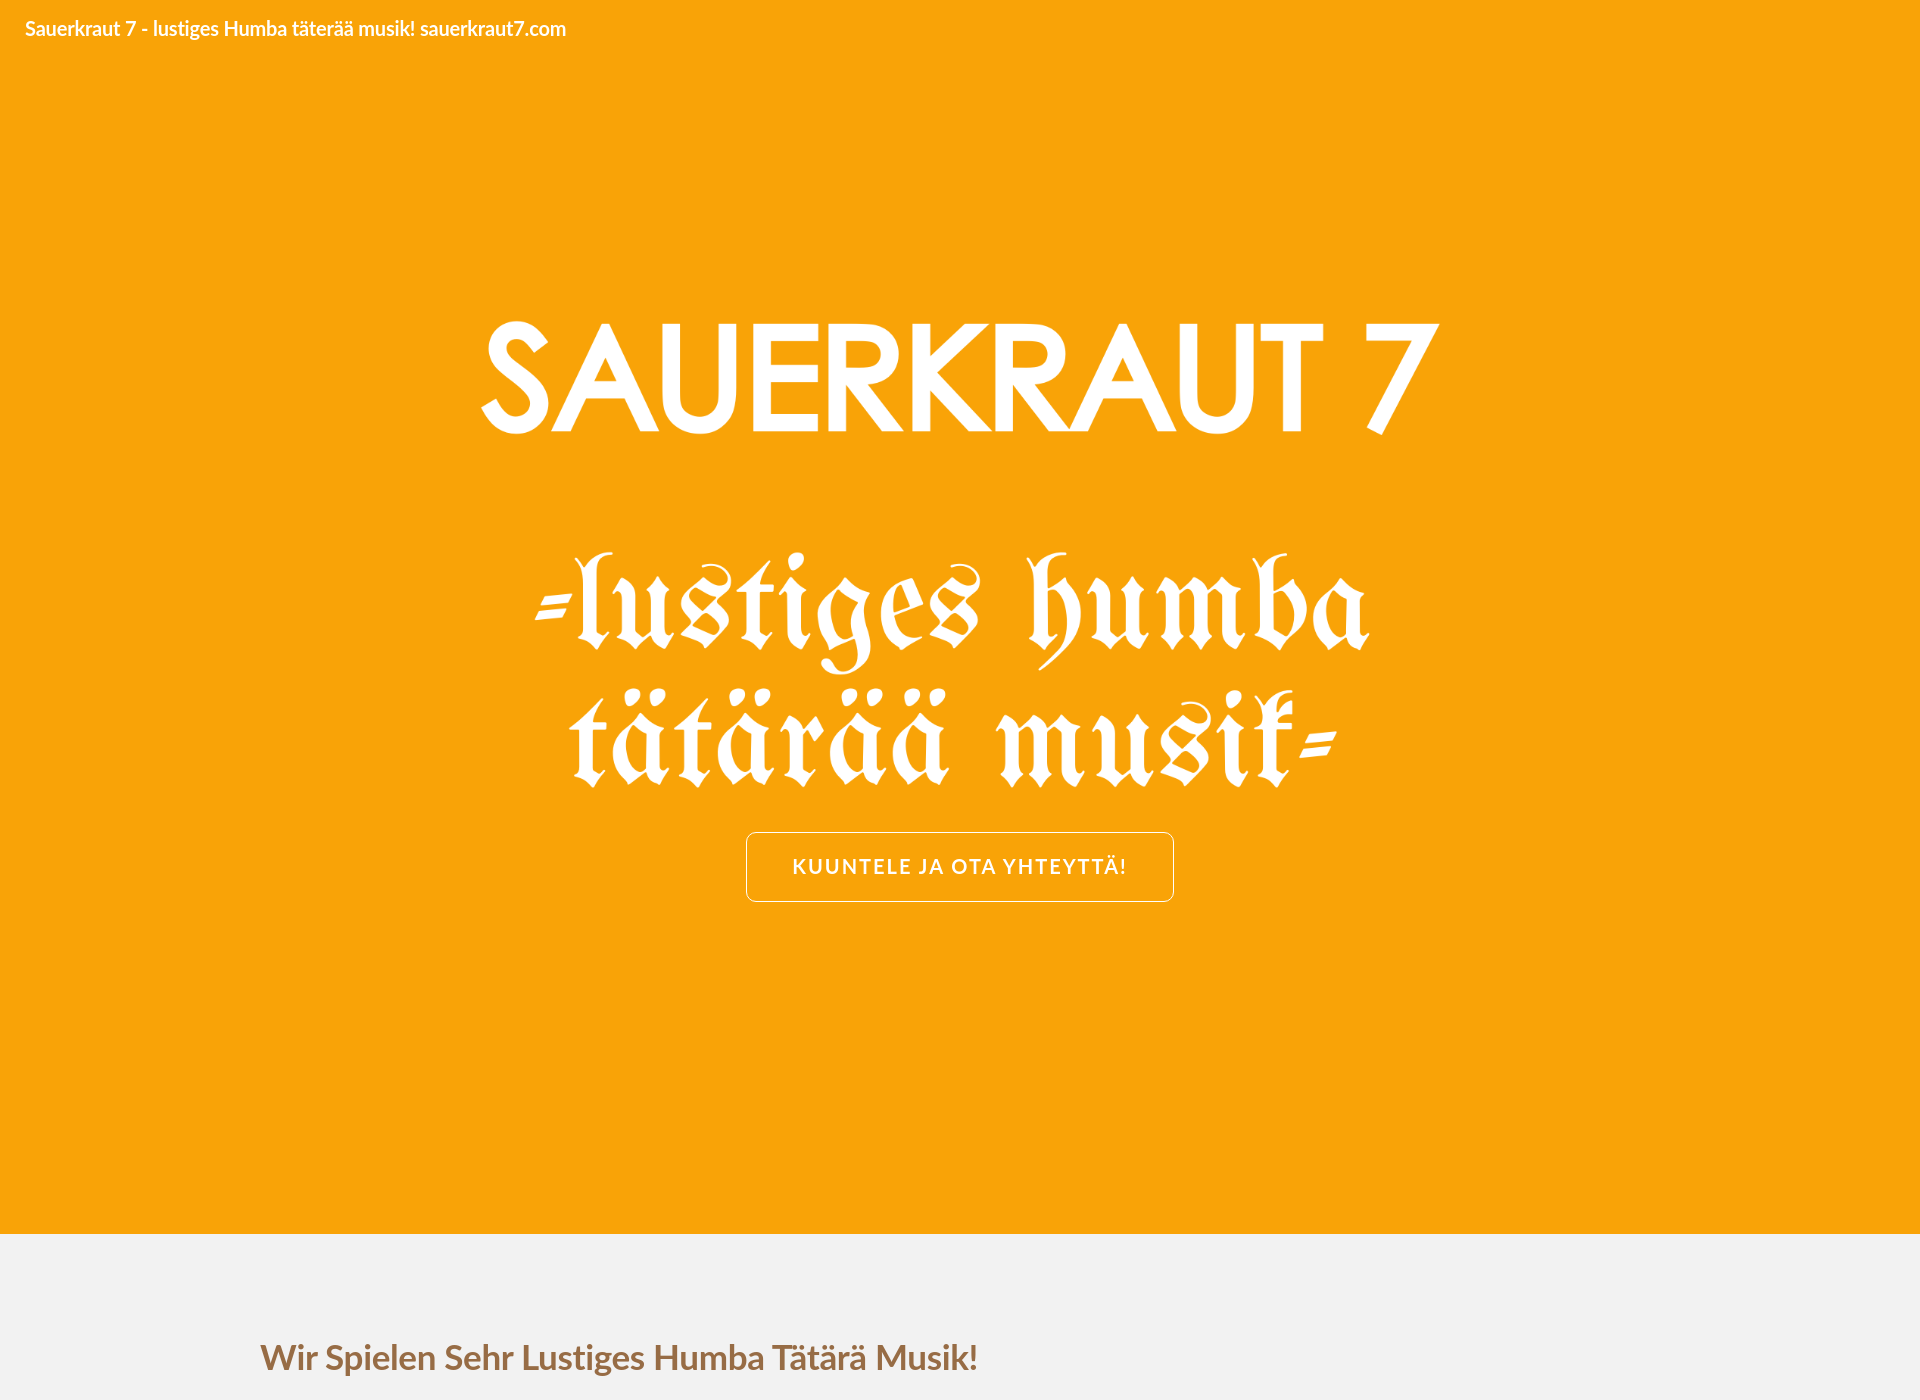 Näyttökuva sauerkraut7.com